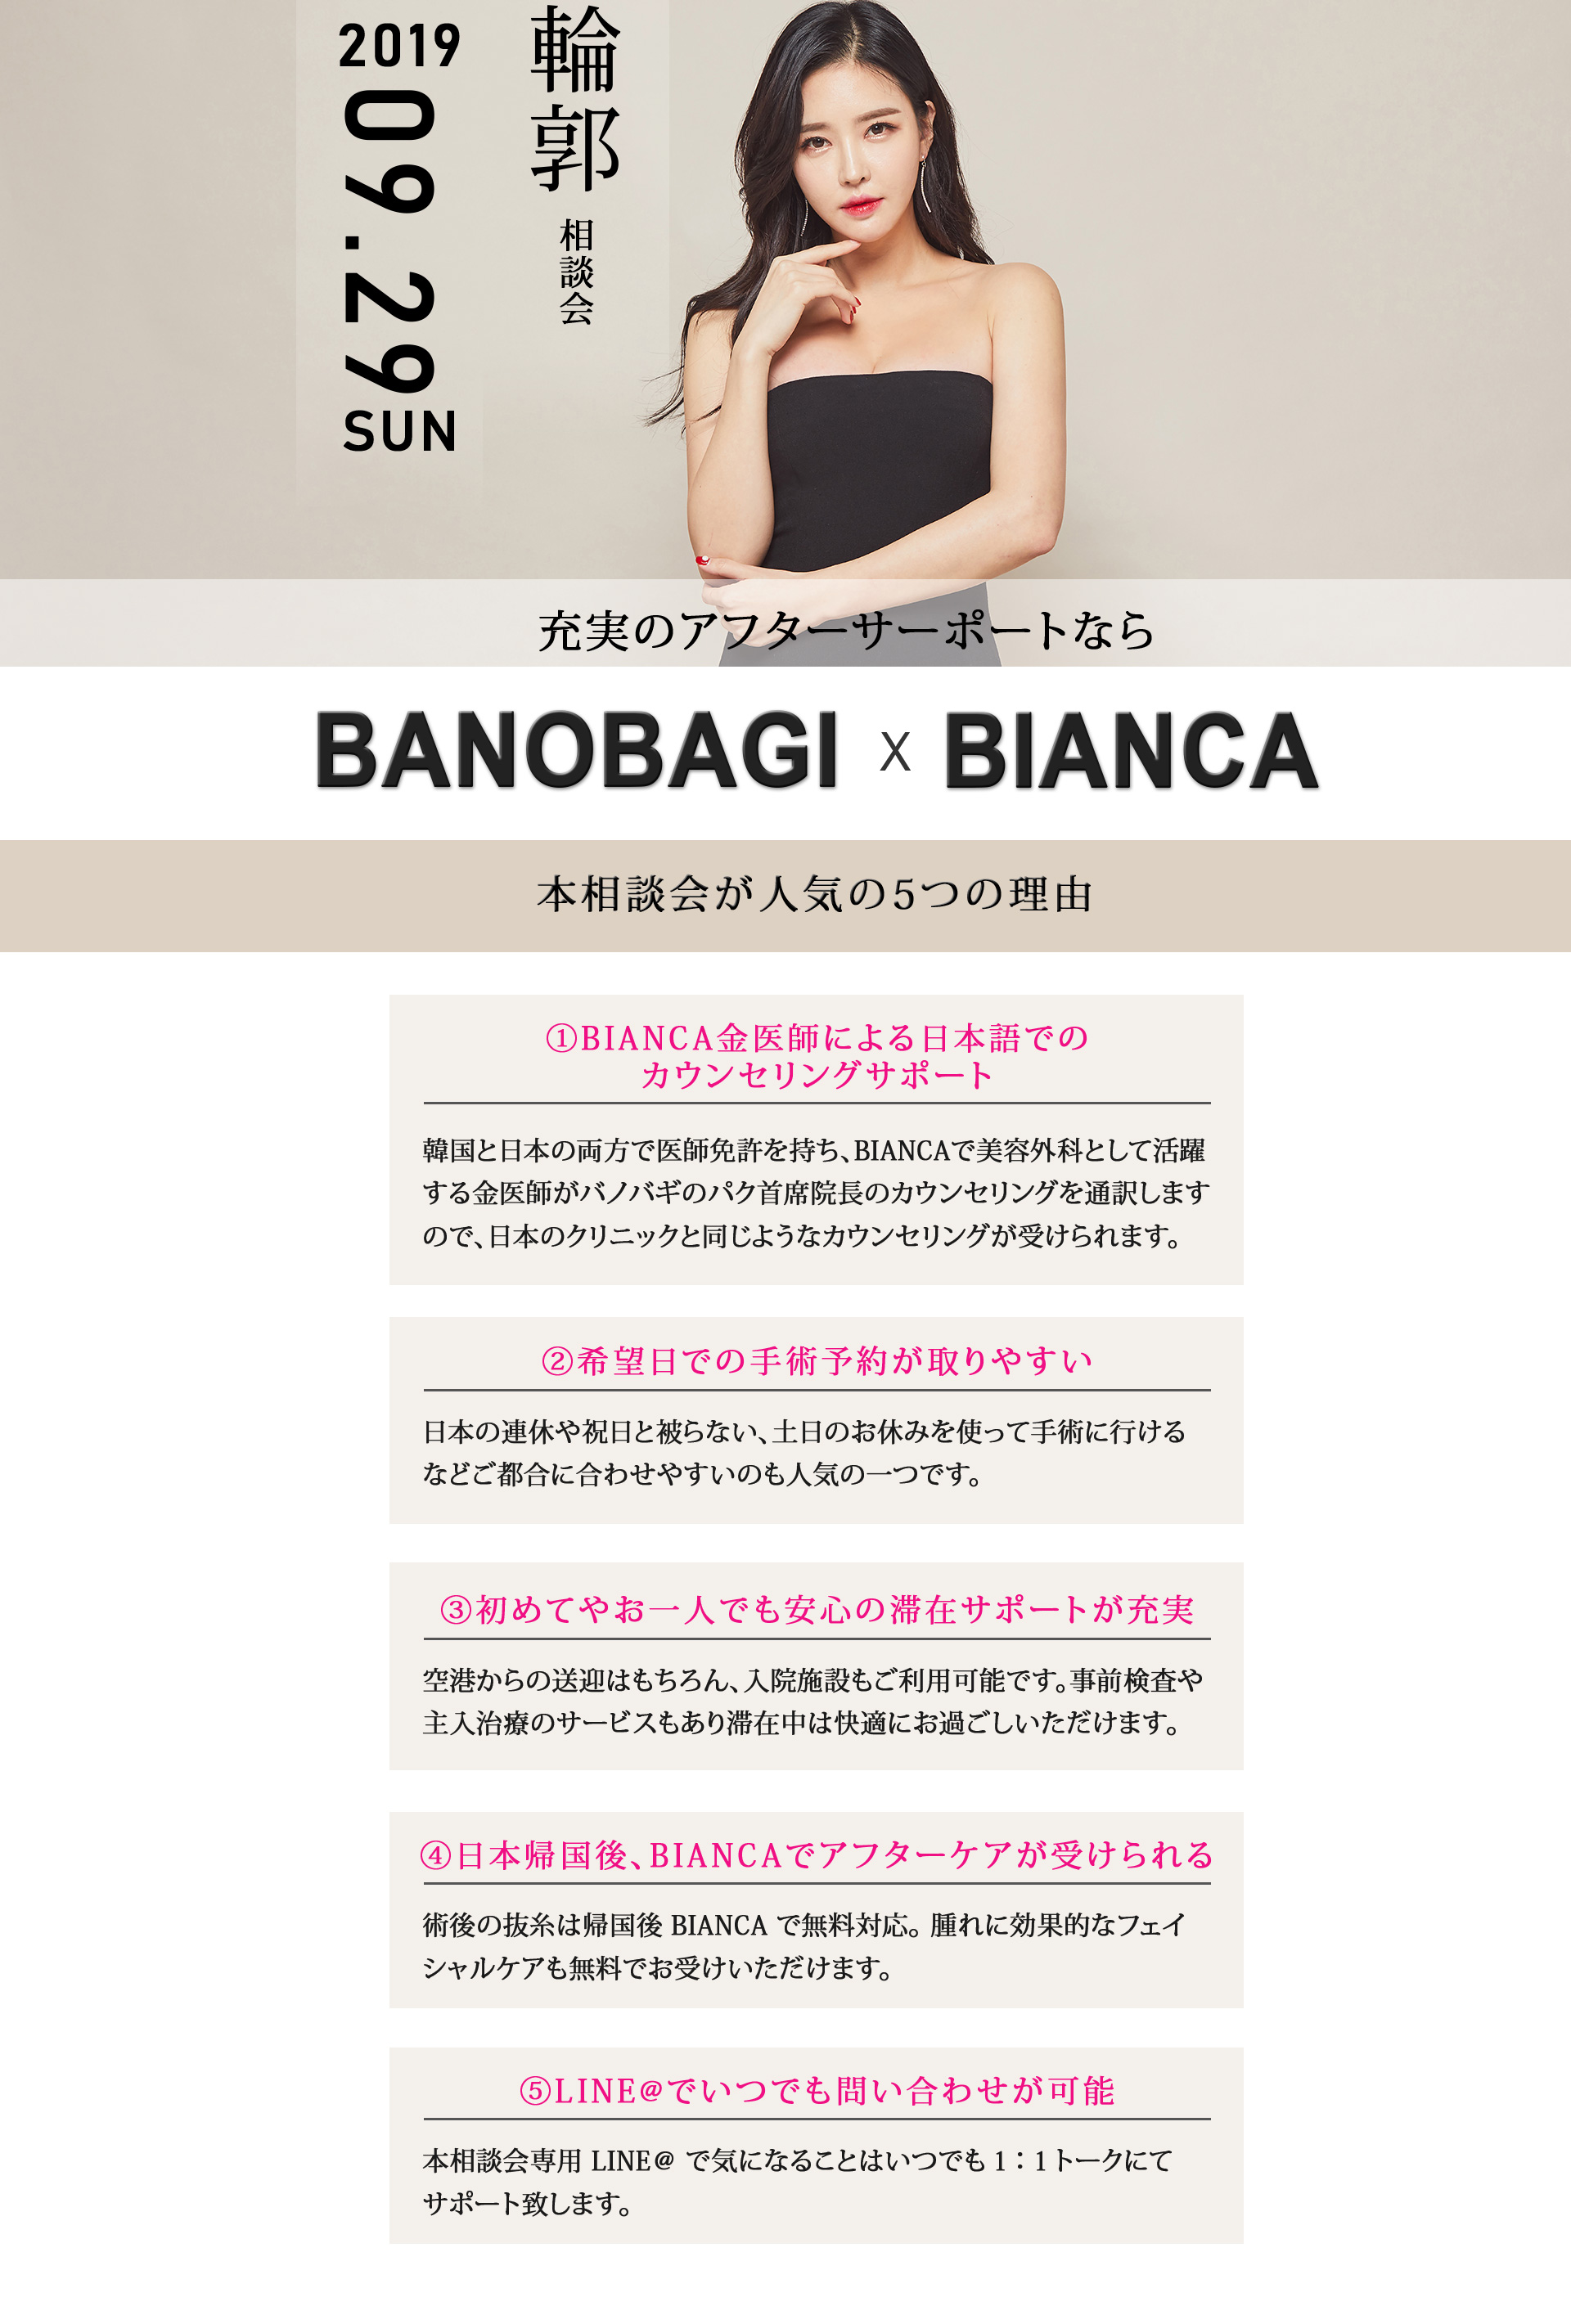 BANOBAGI X BIANCA 充実のアフターサーポートなら